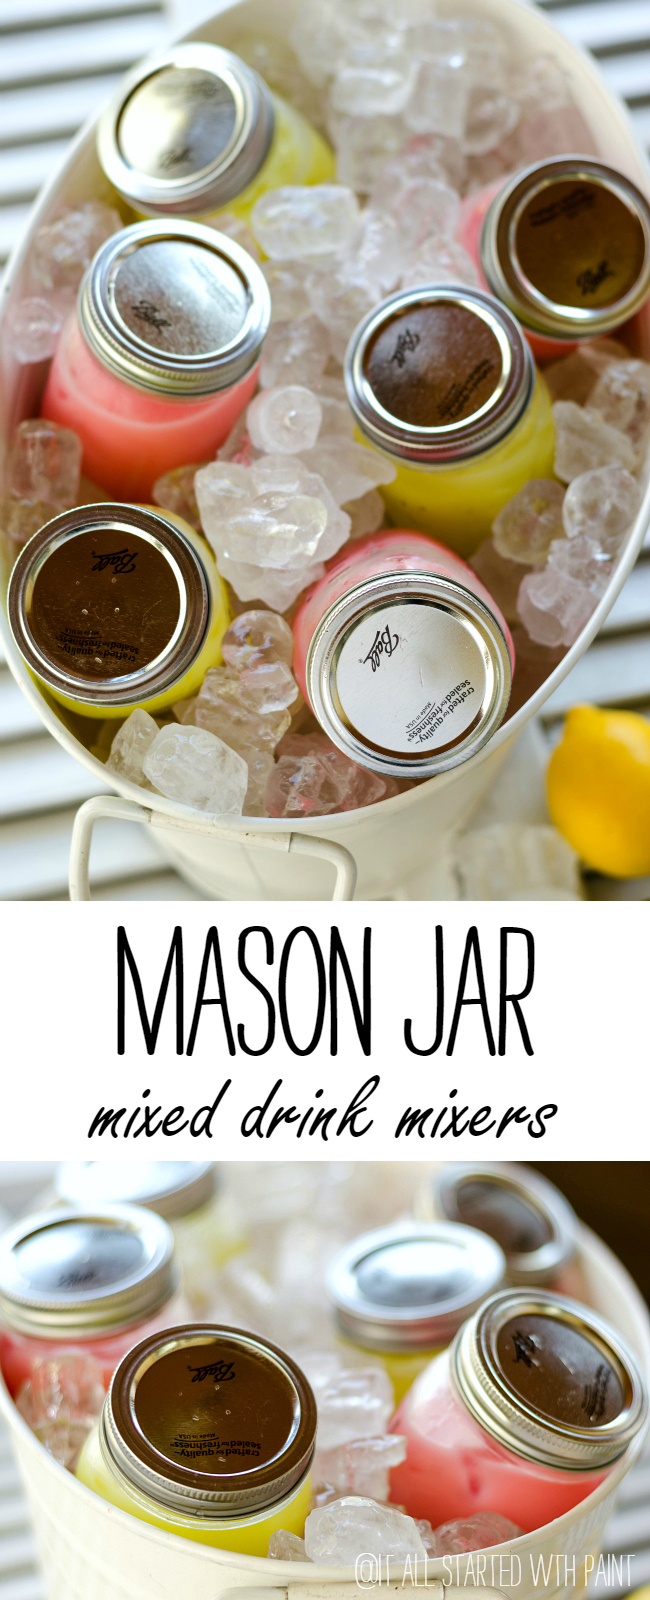 Mason Jar Drink Ideas